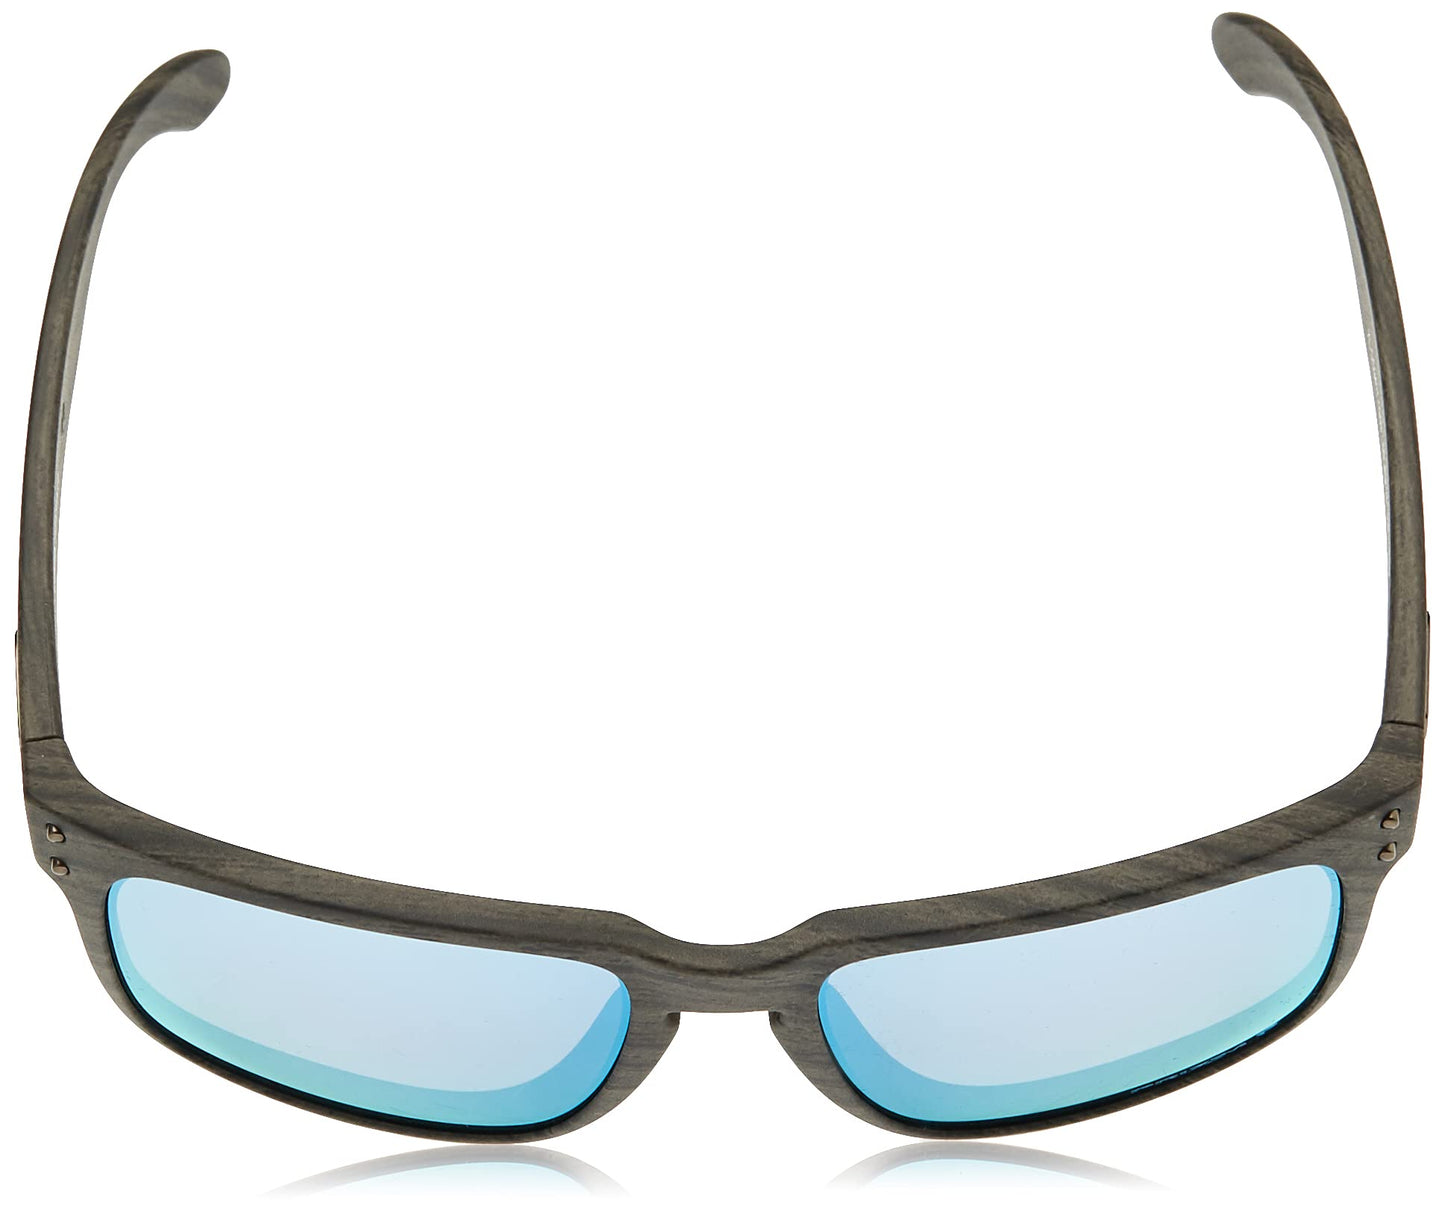 Oakley Men Polarized Blue Lens Square Sunglasses - 0OO9417